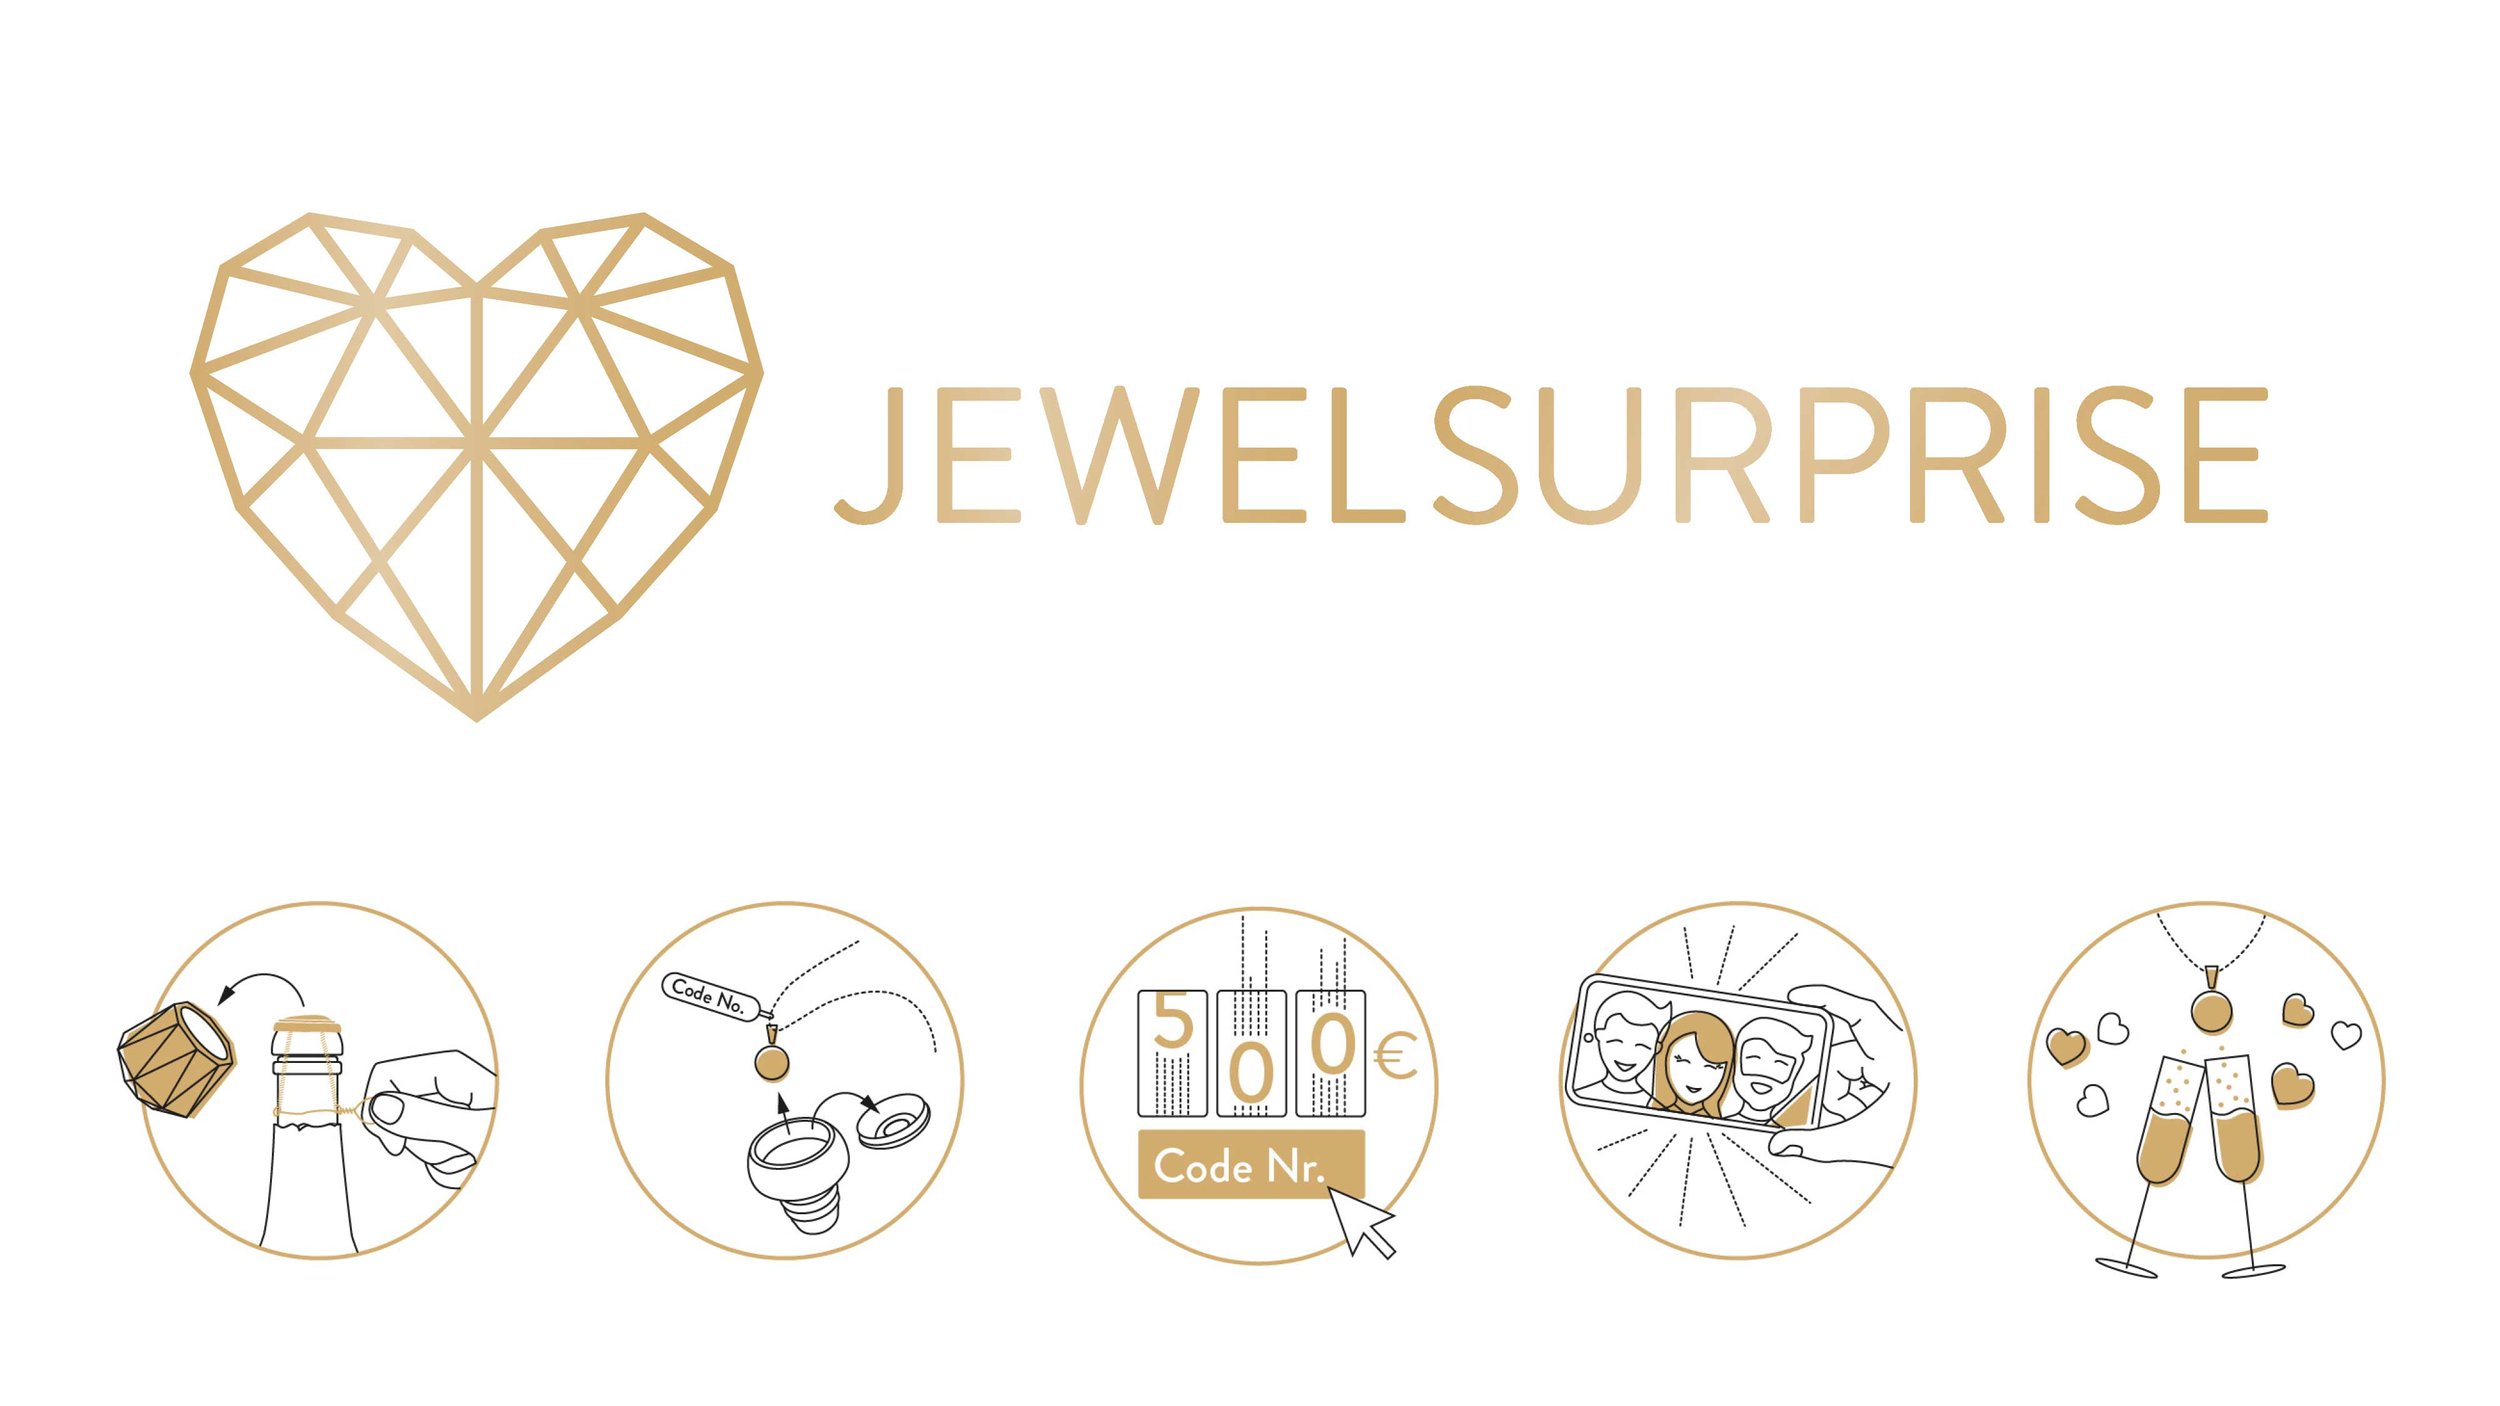 Jewel-Surprise-Brand-Startup-yellow-design.jpg